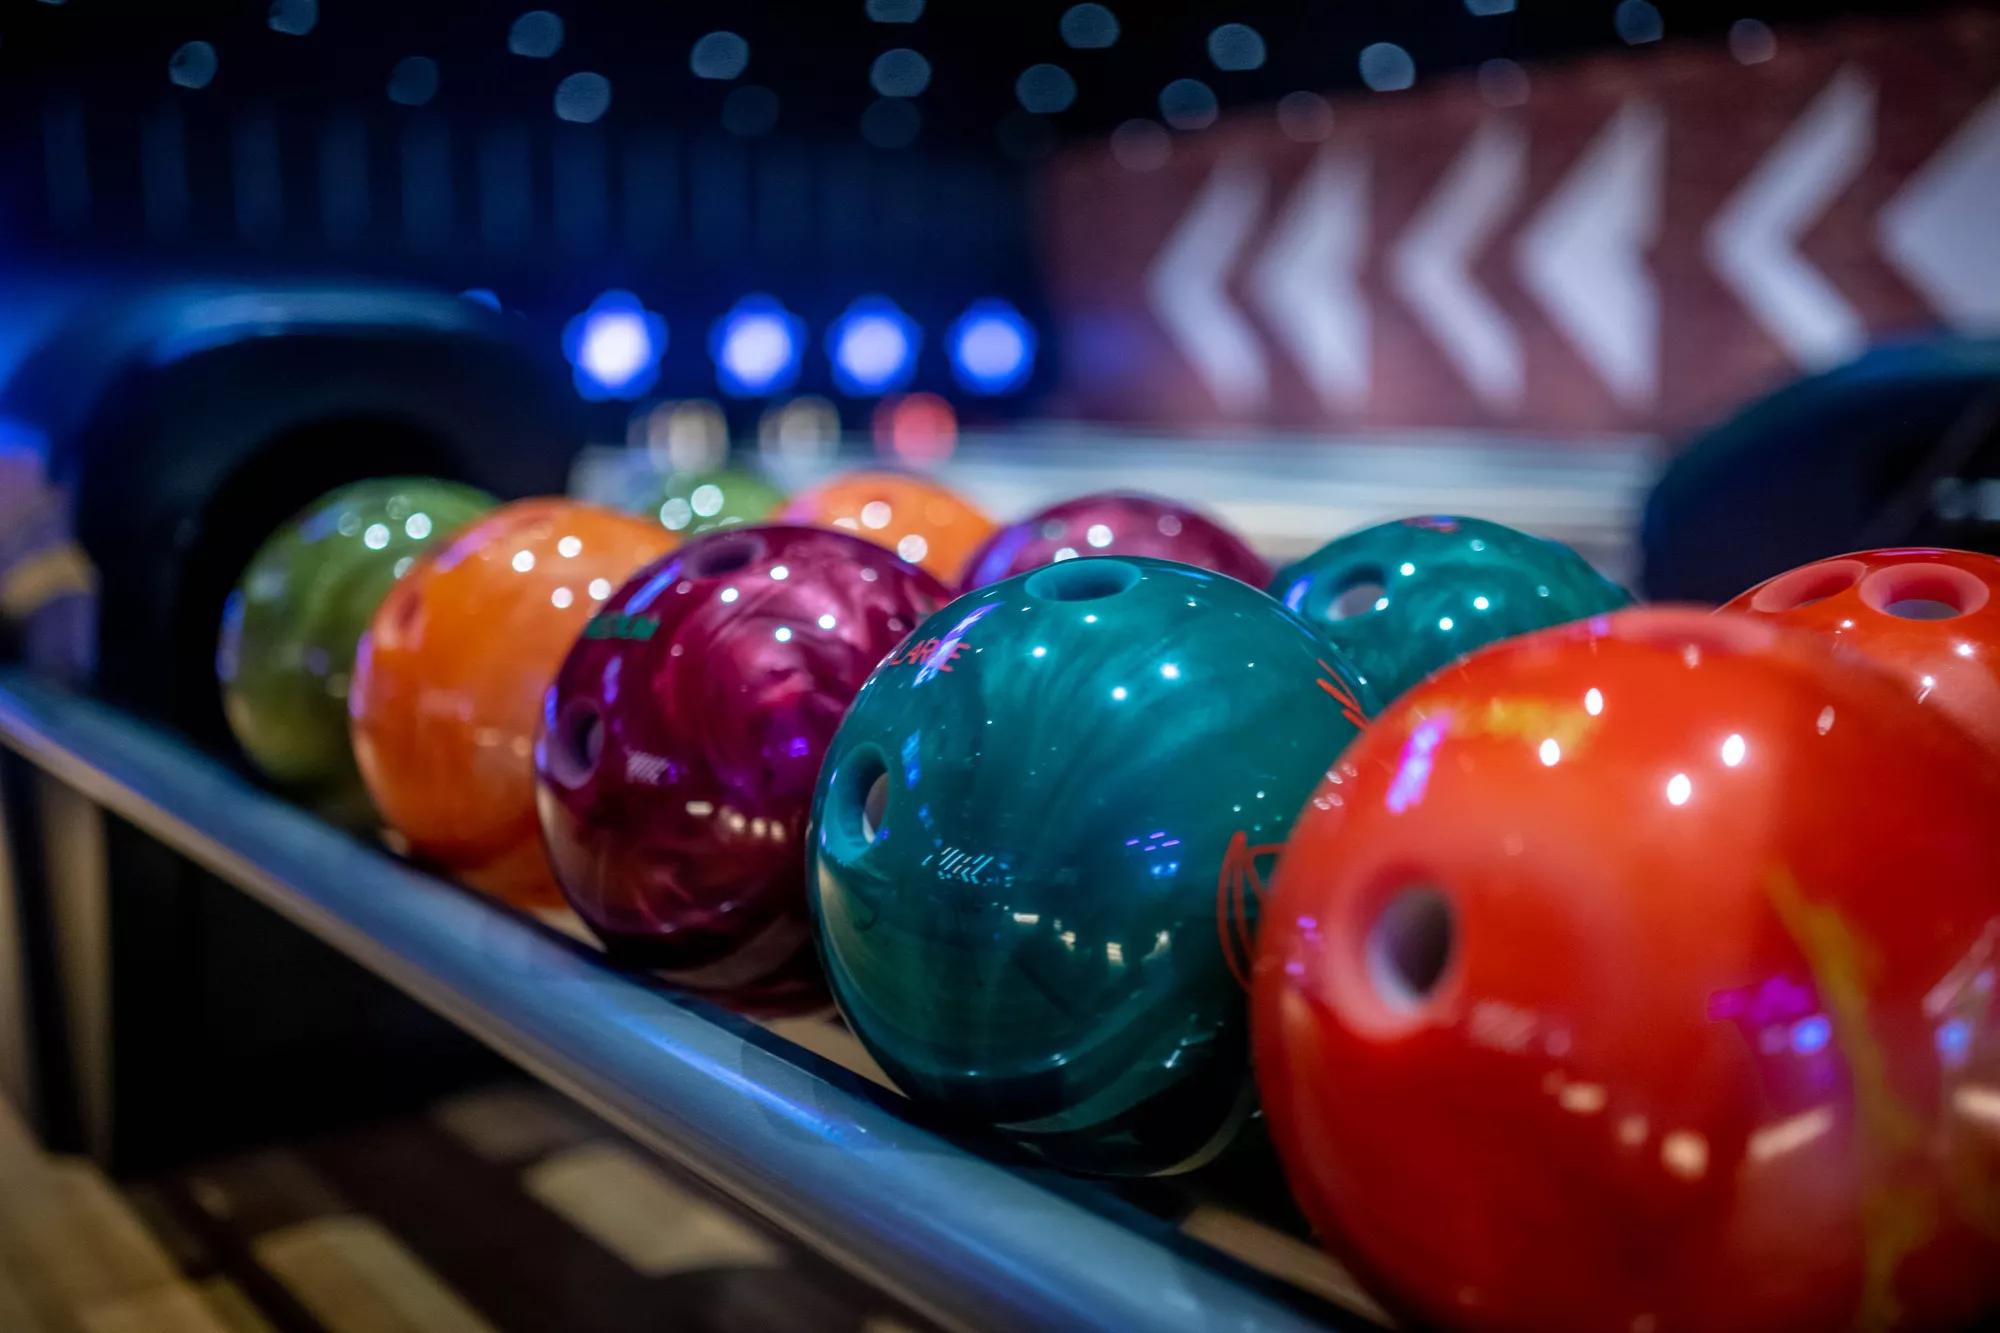 ten pin bowling balls